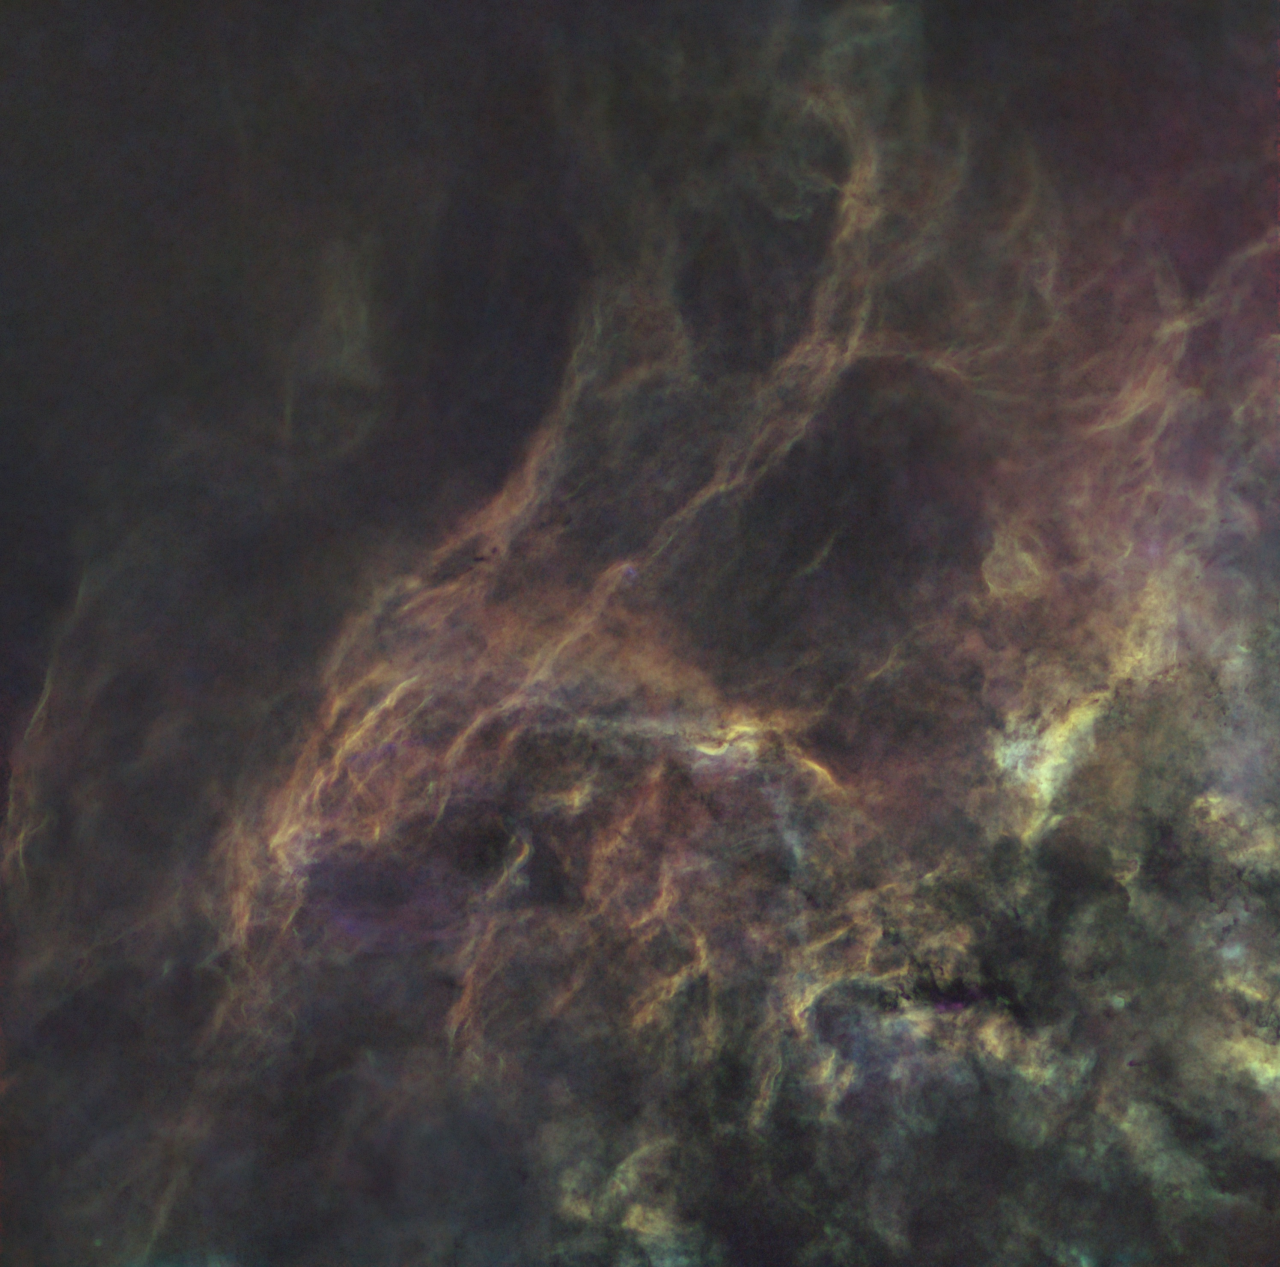 Cygnus near DWB111 SHO Sii 7x900s Ha 2x360s Ha 20x900s Oiii 8x720s QuickEdit Starless jpg